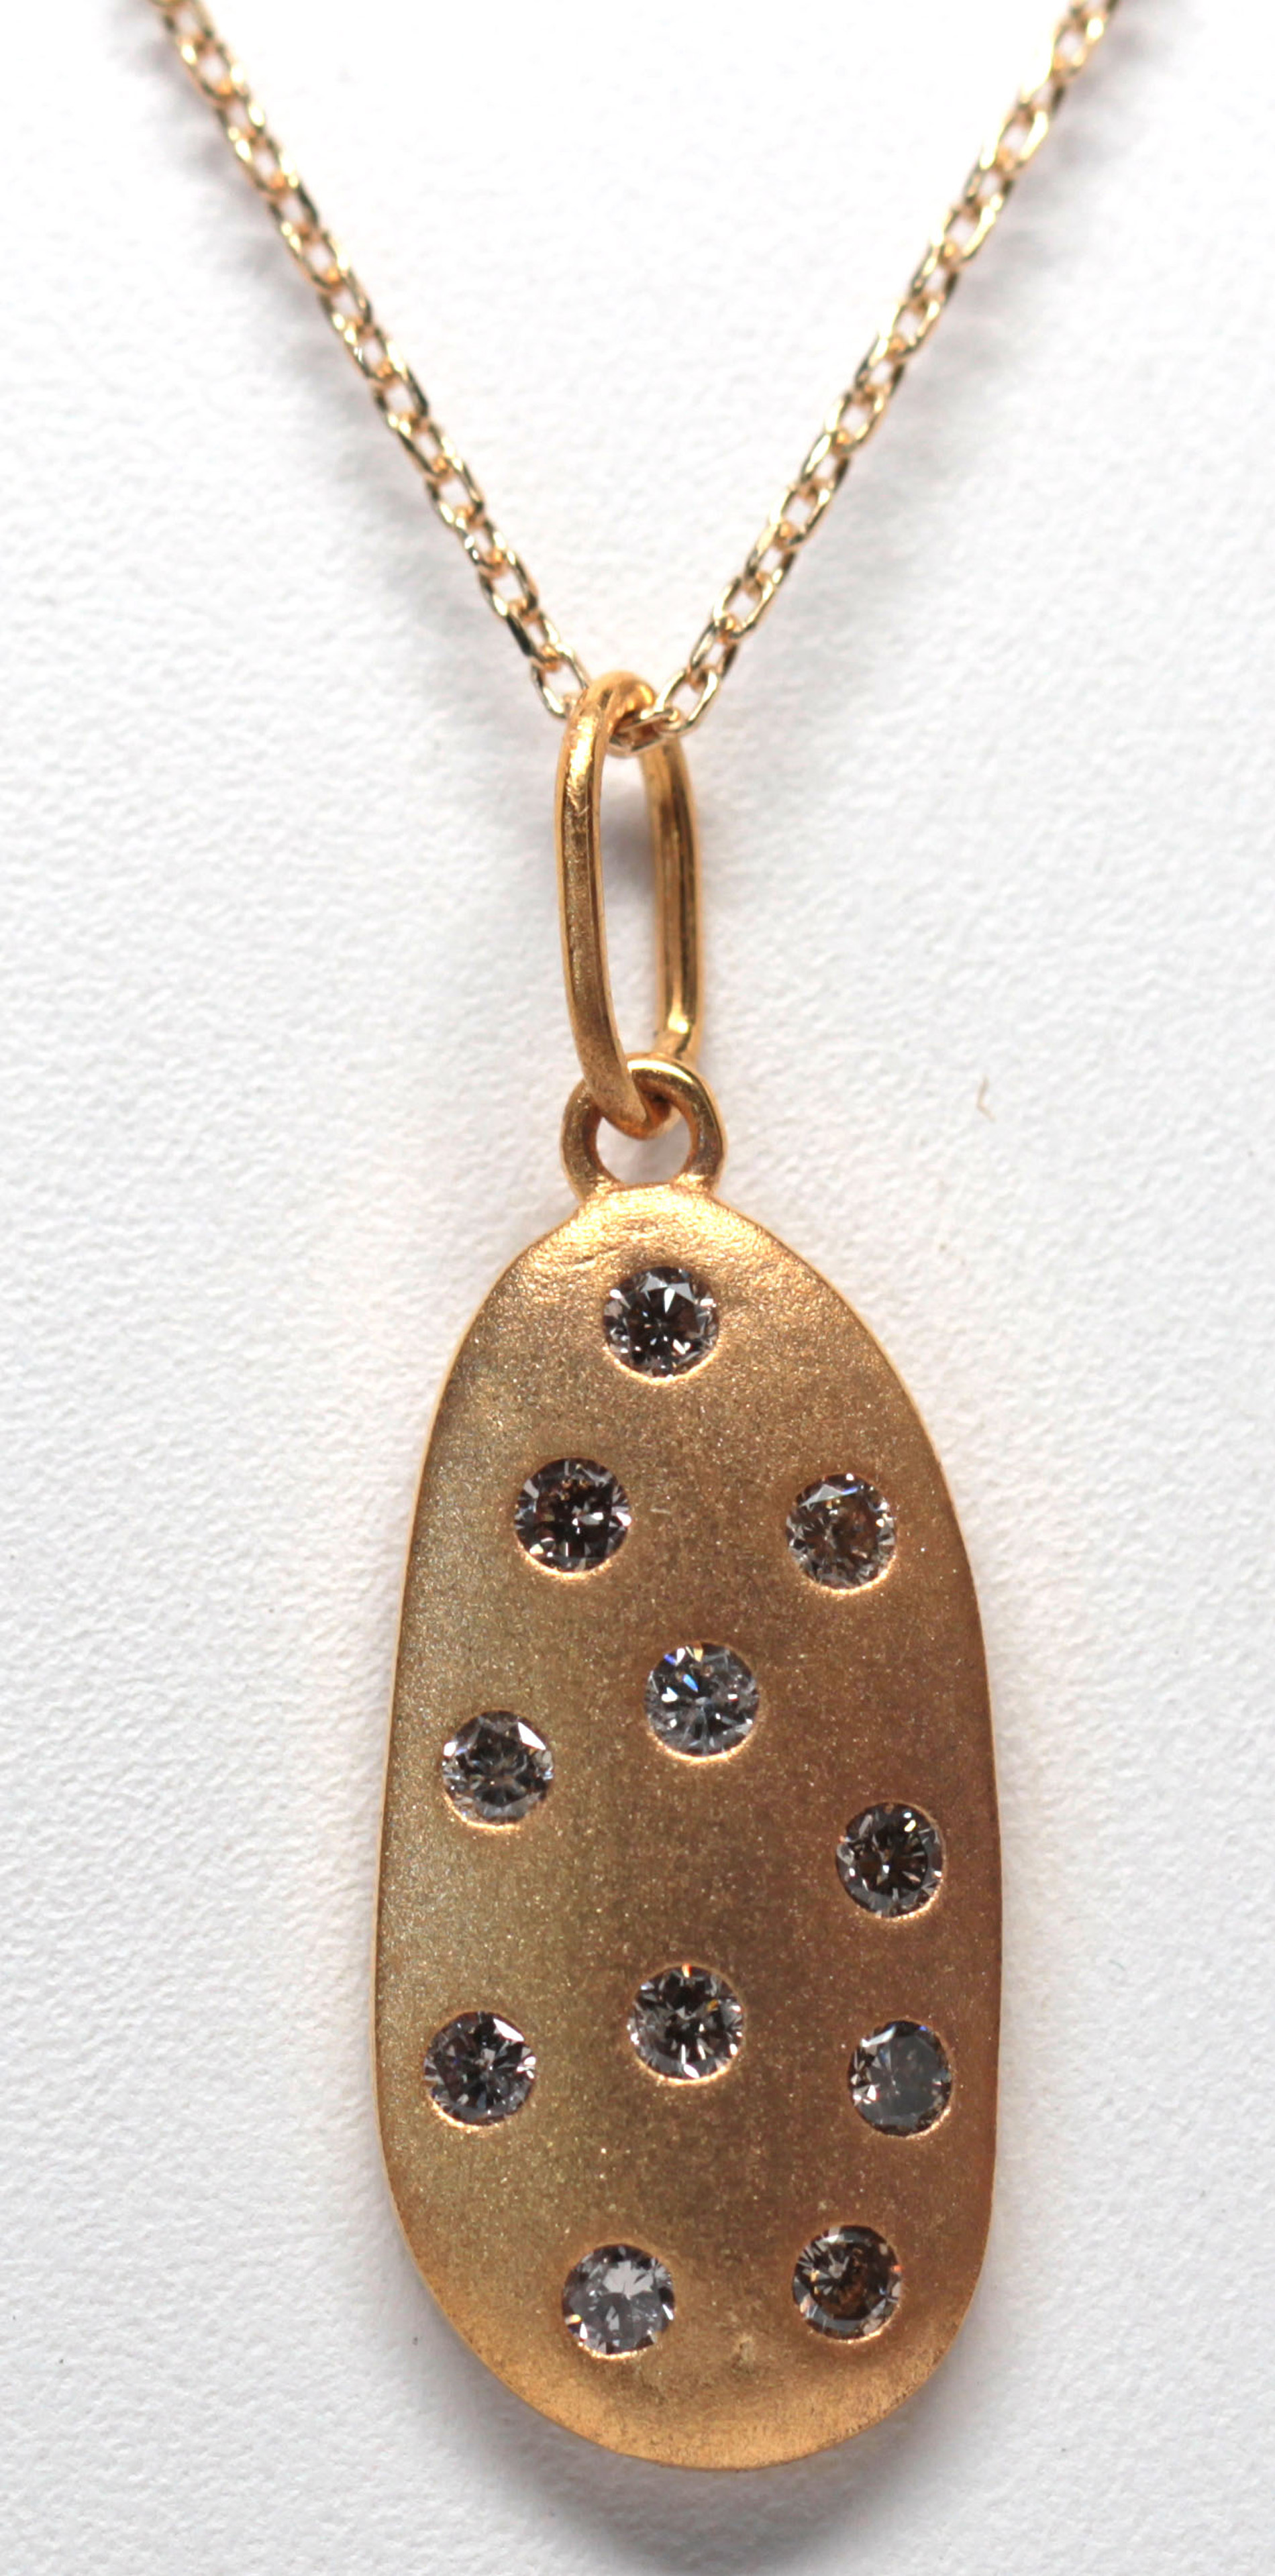 Diamond, 14k yellow gold pendant-necklace